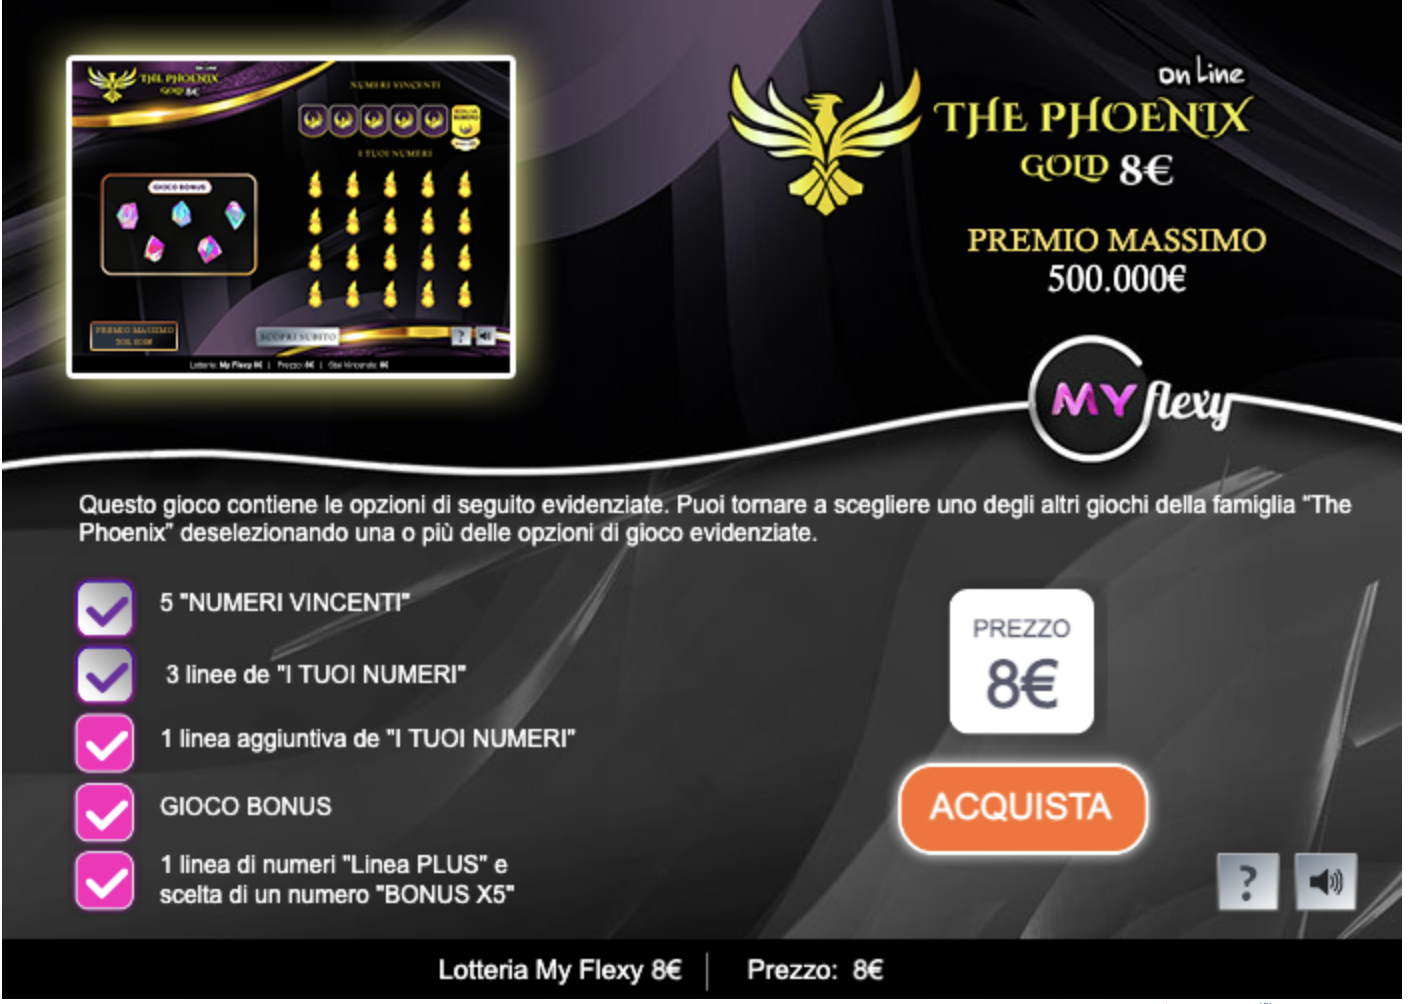 The Phoenix Gold 8€ - online